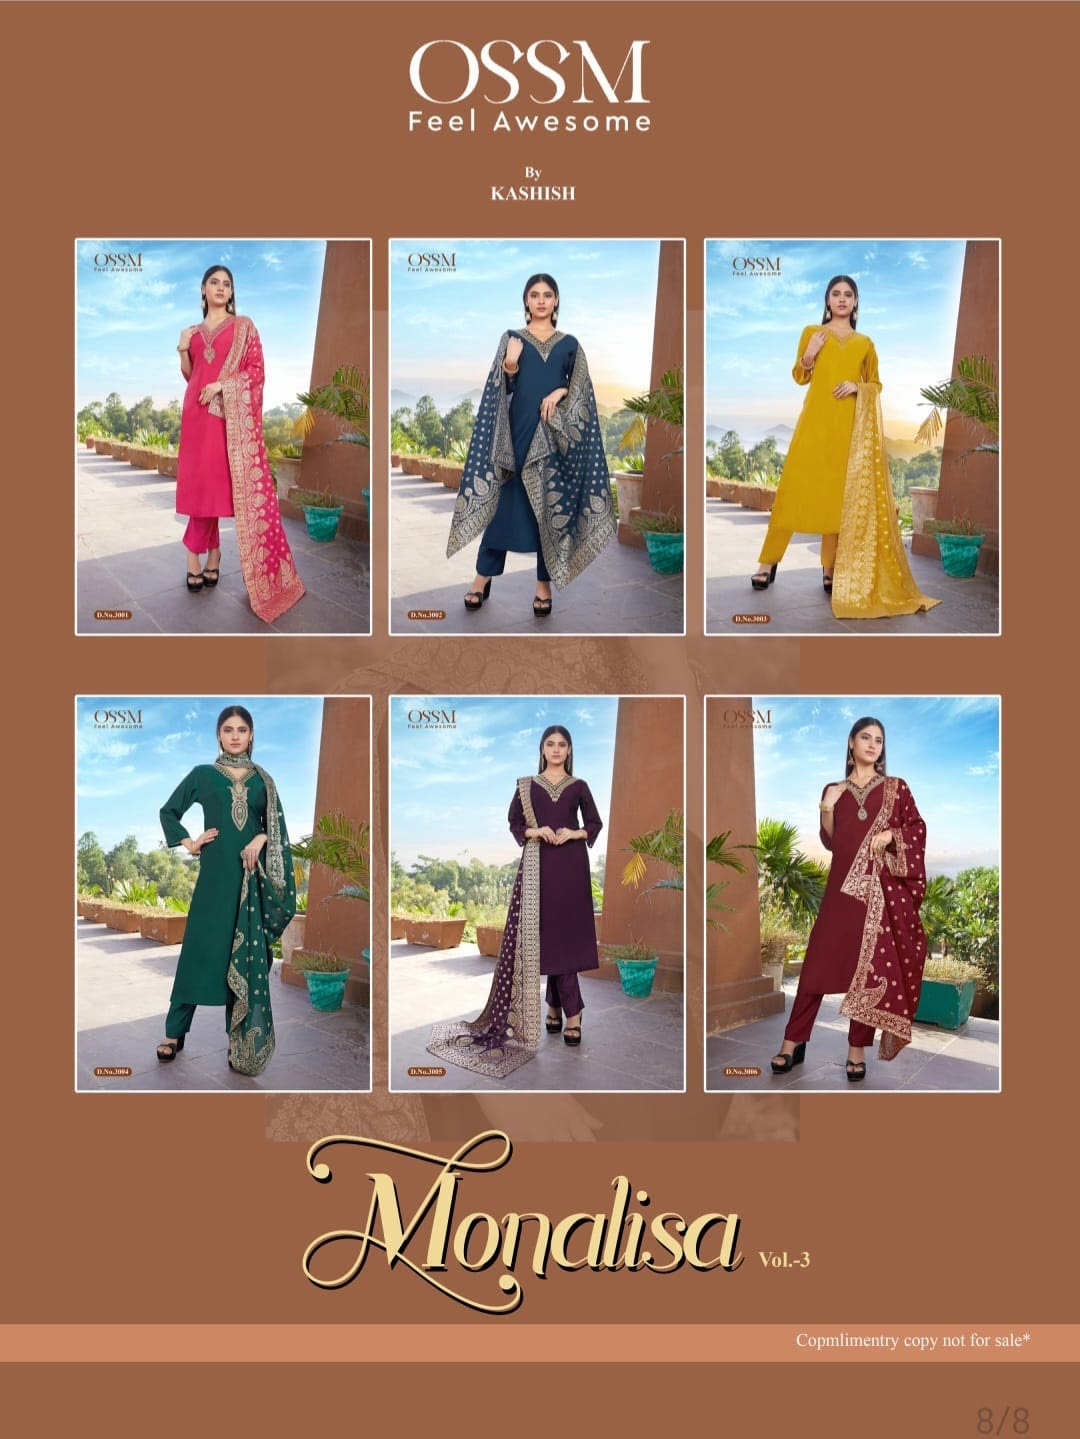 Monalisa Vol 3 Ossm Viscose Readymade Pant Style Suits